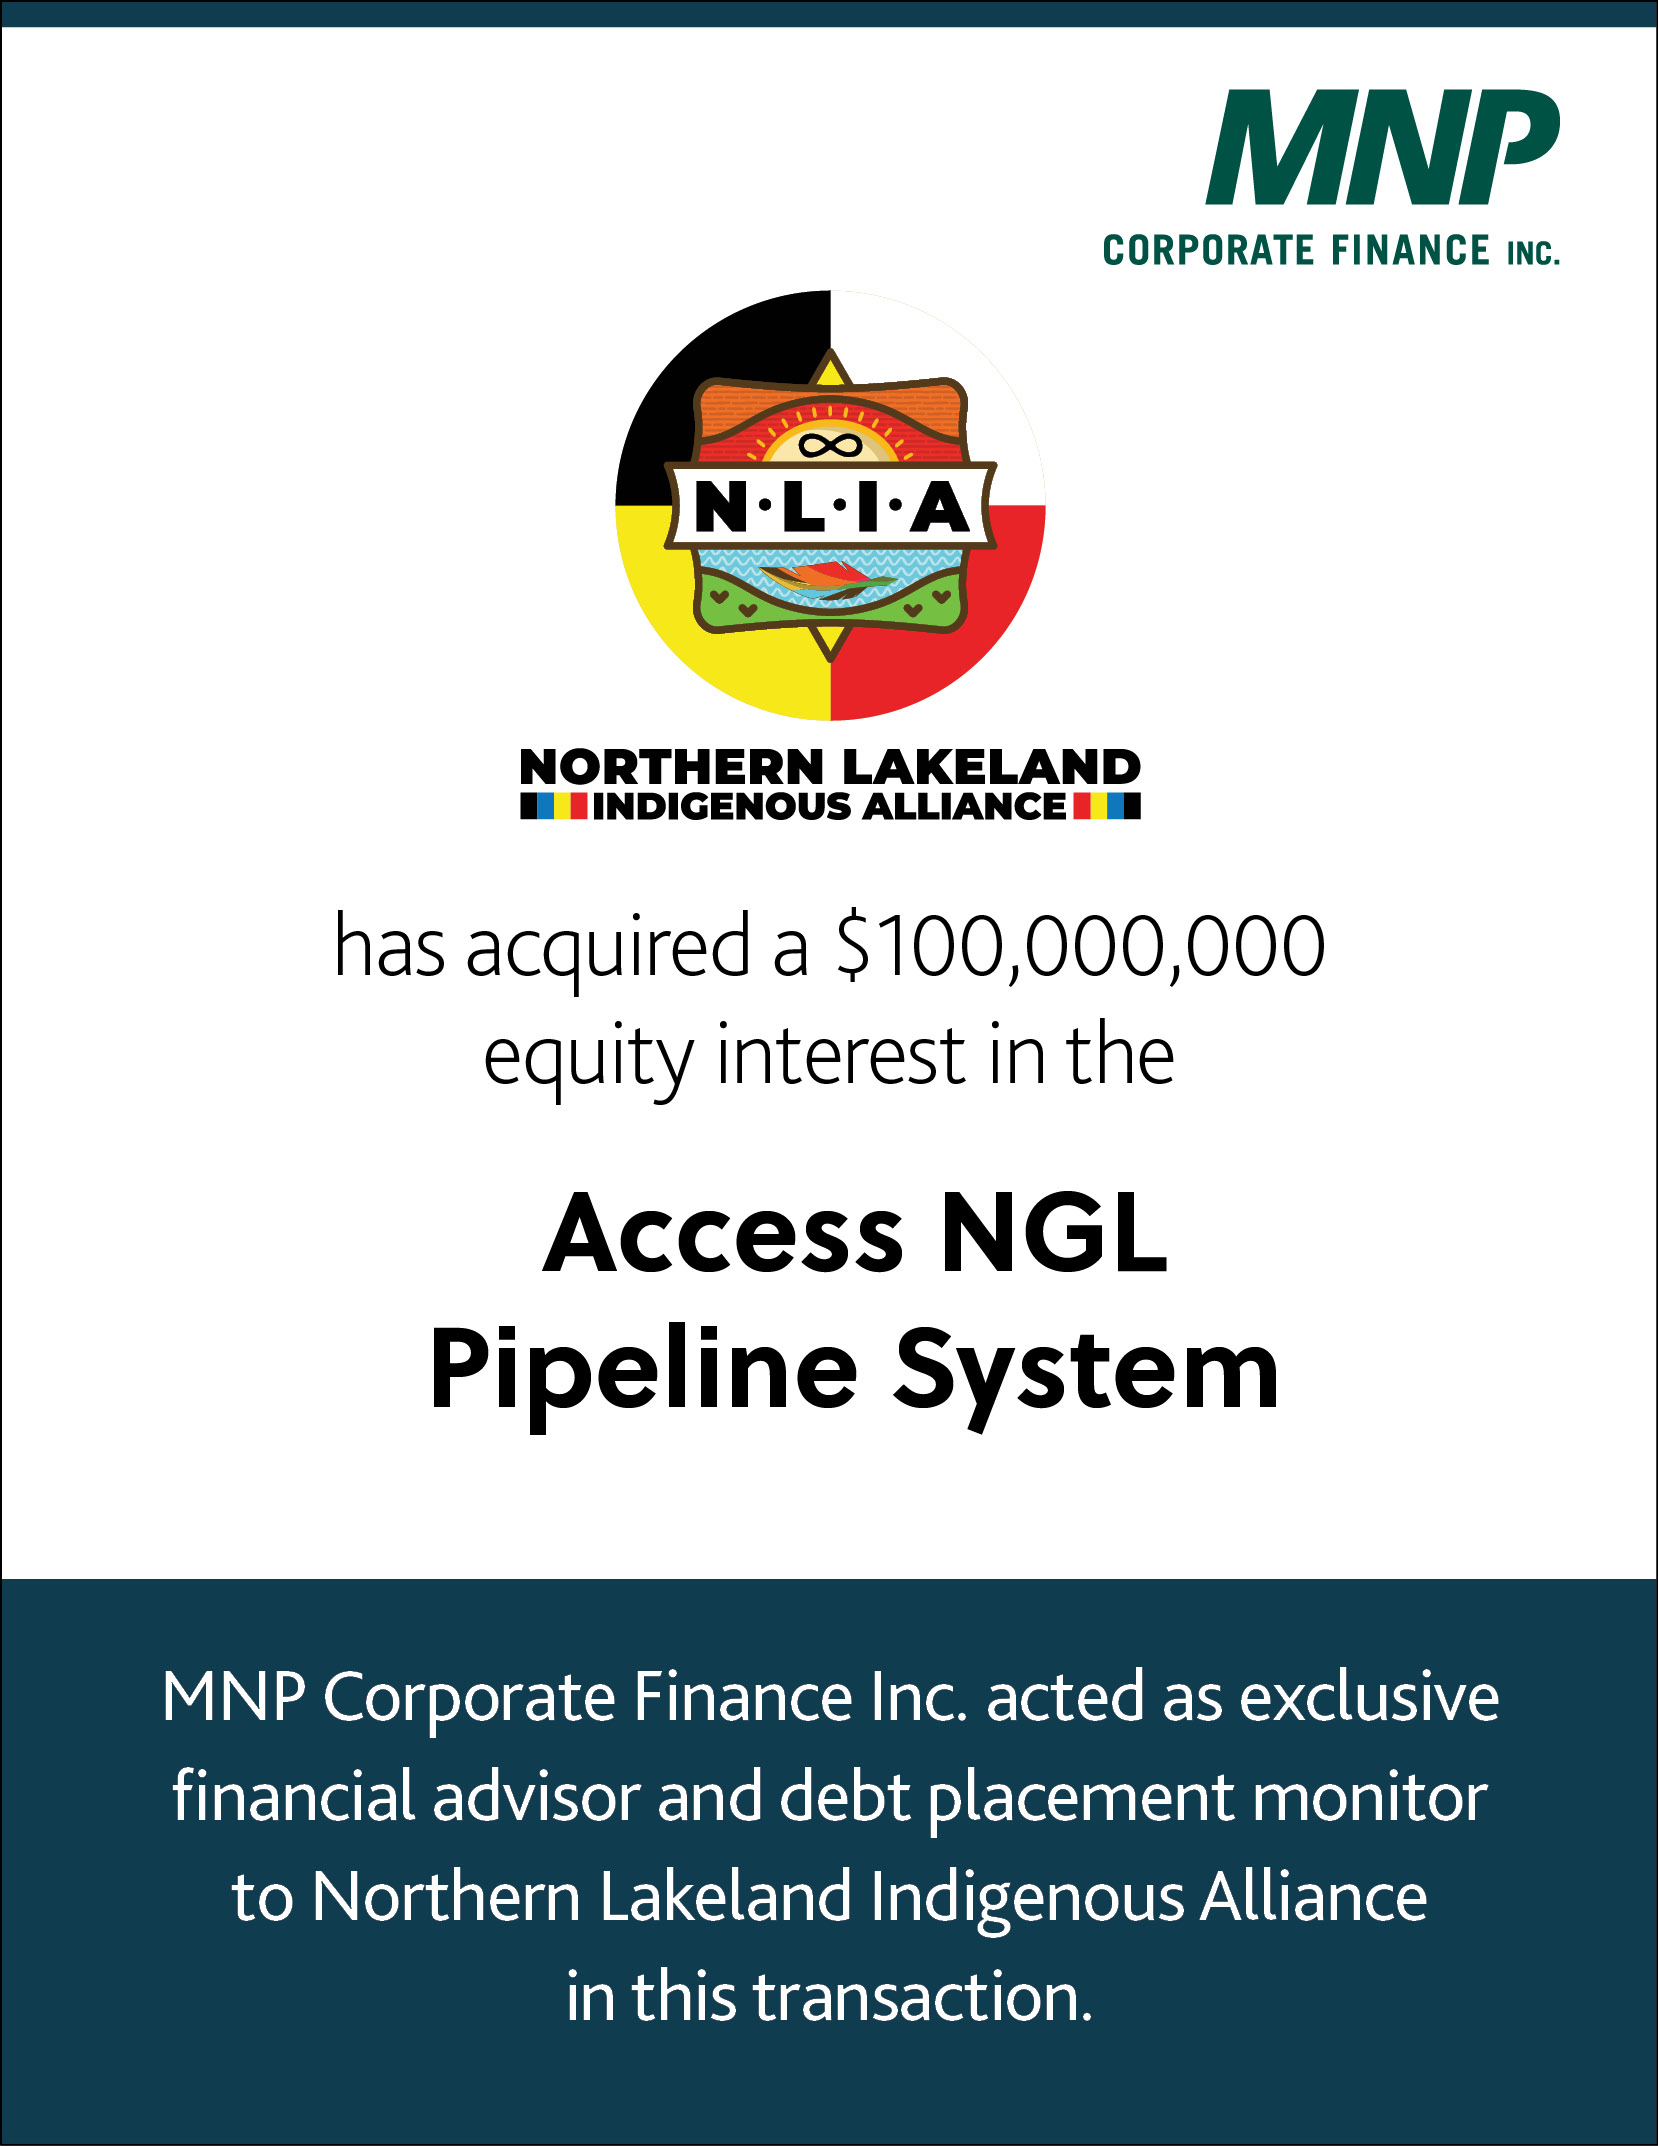 Northern Lakeland Indigenous Alliance